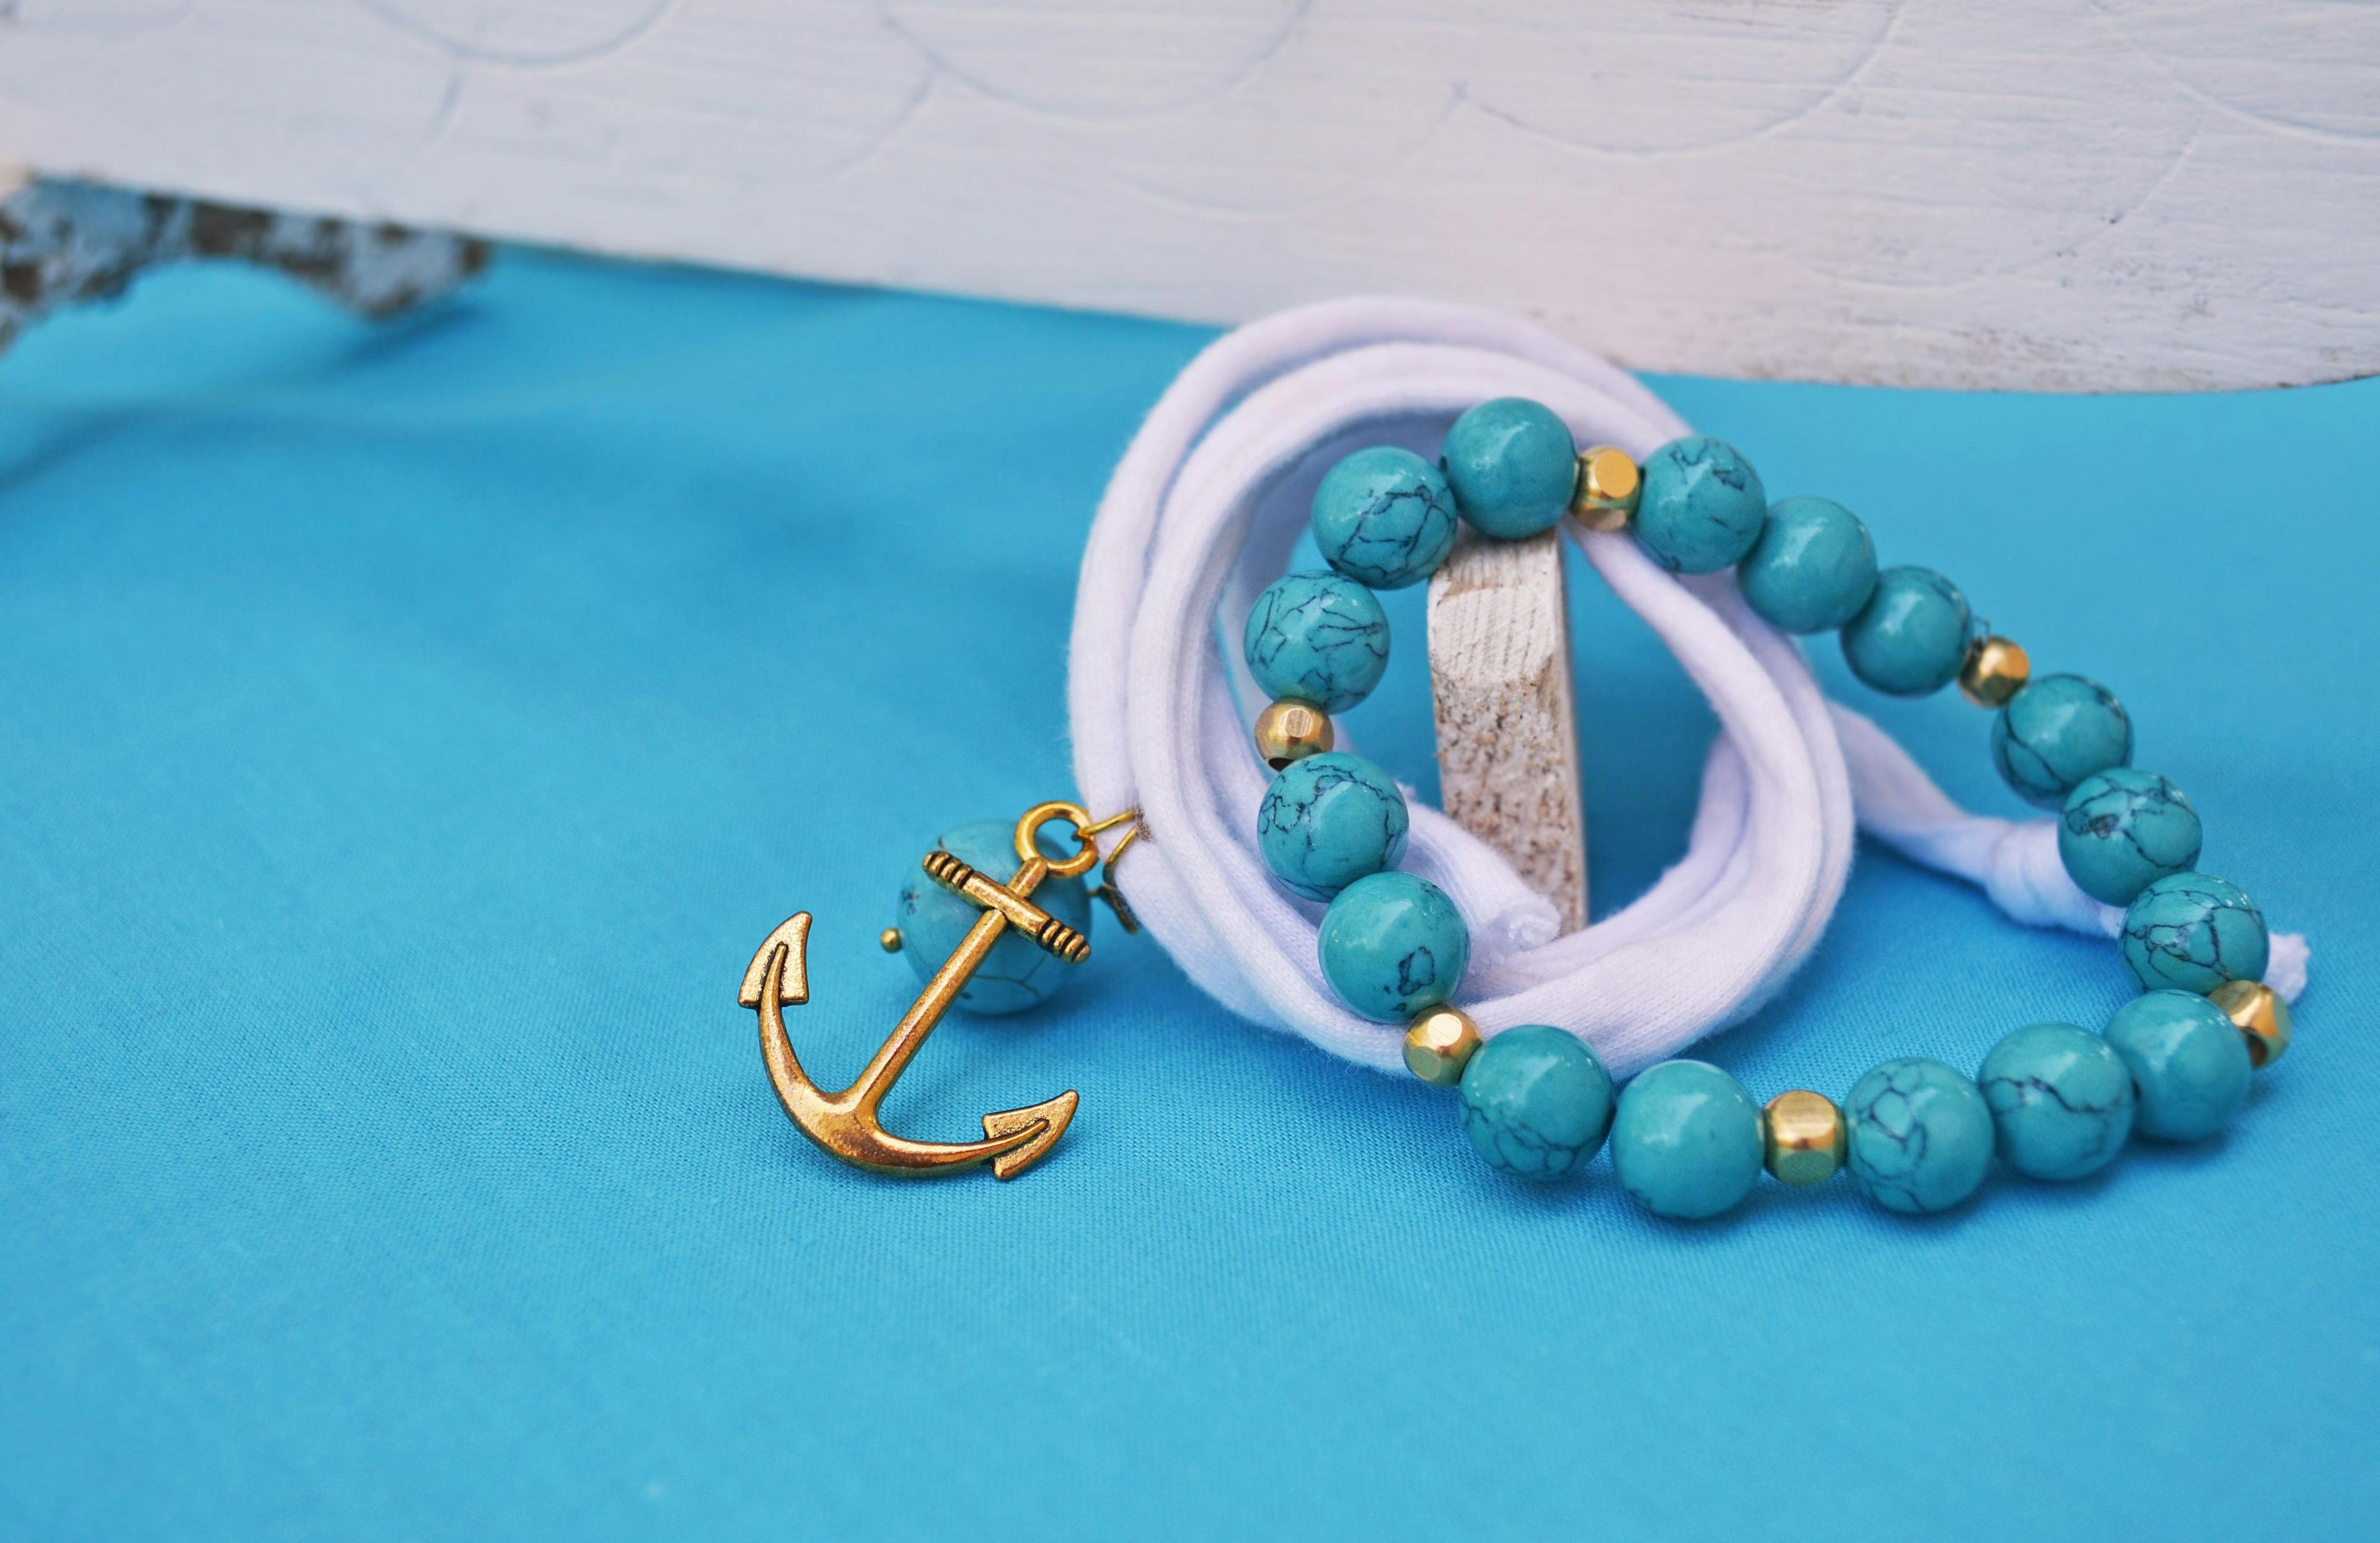 summer jewelry - turquoise gemstone bracelet and gold anchor charm | Image credit: © photo_stella - stock.adobe.com